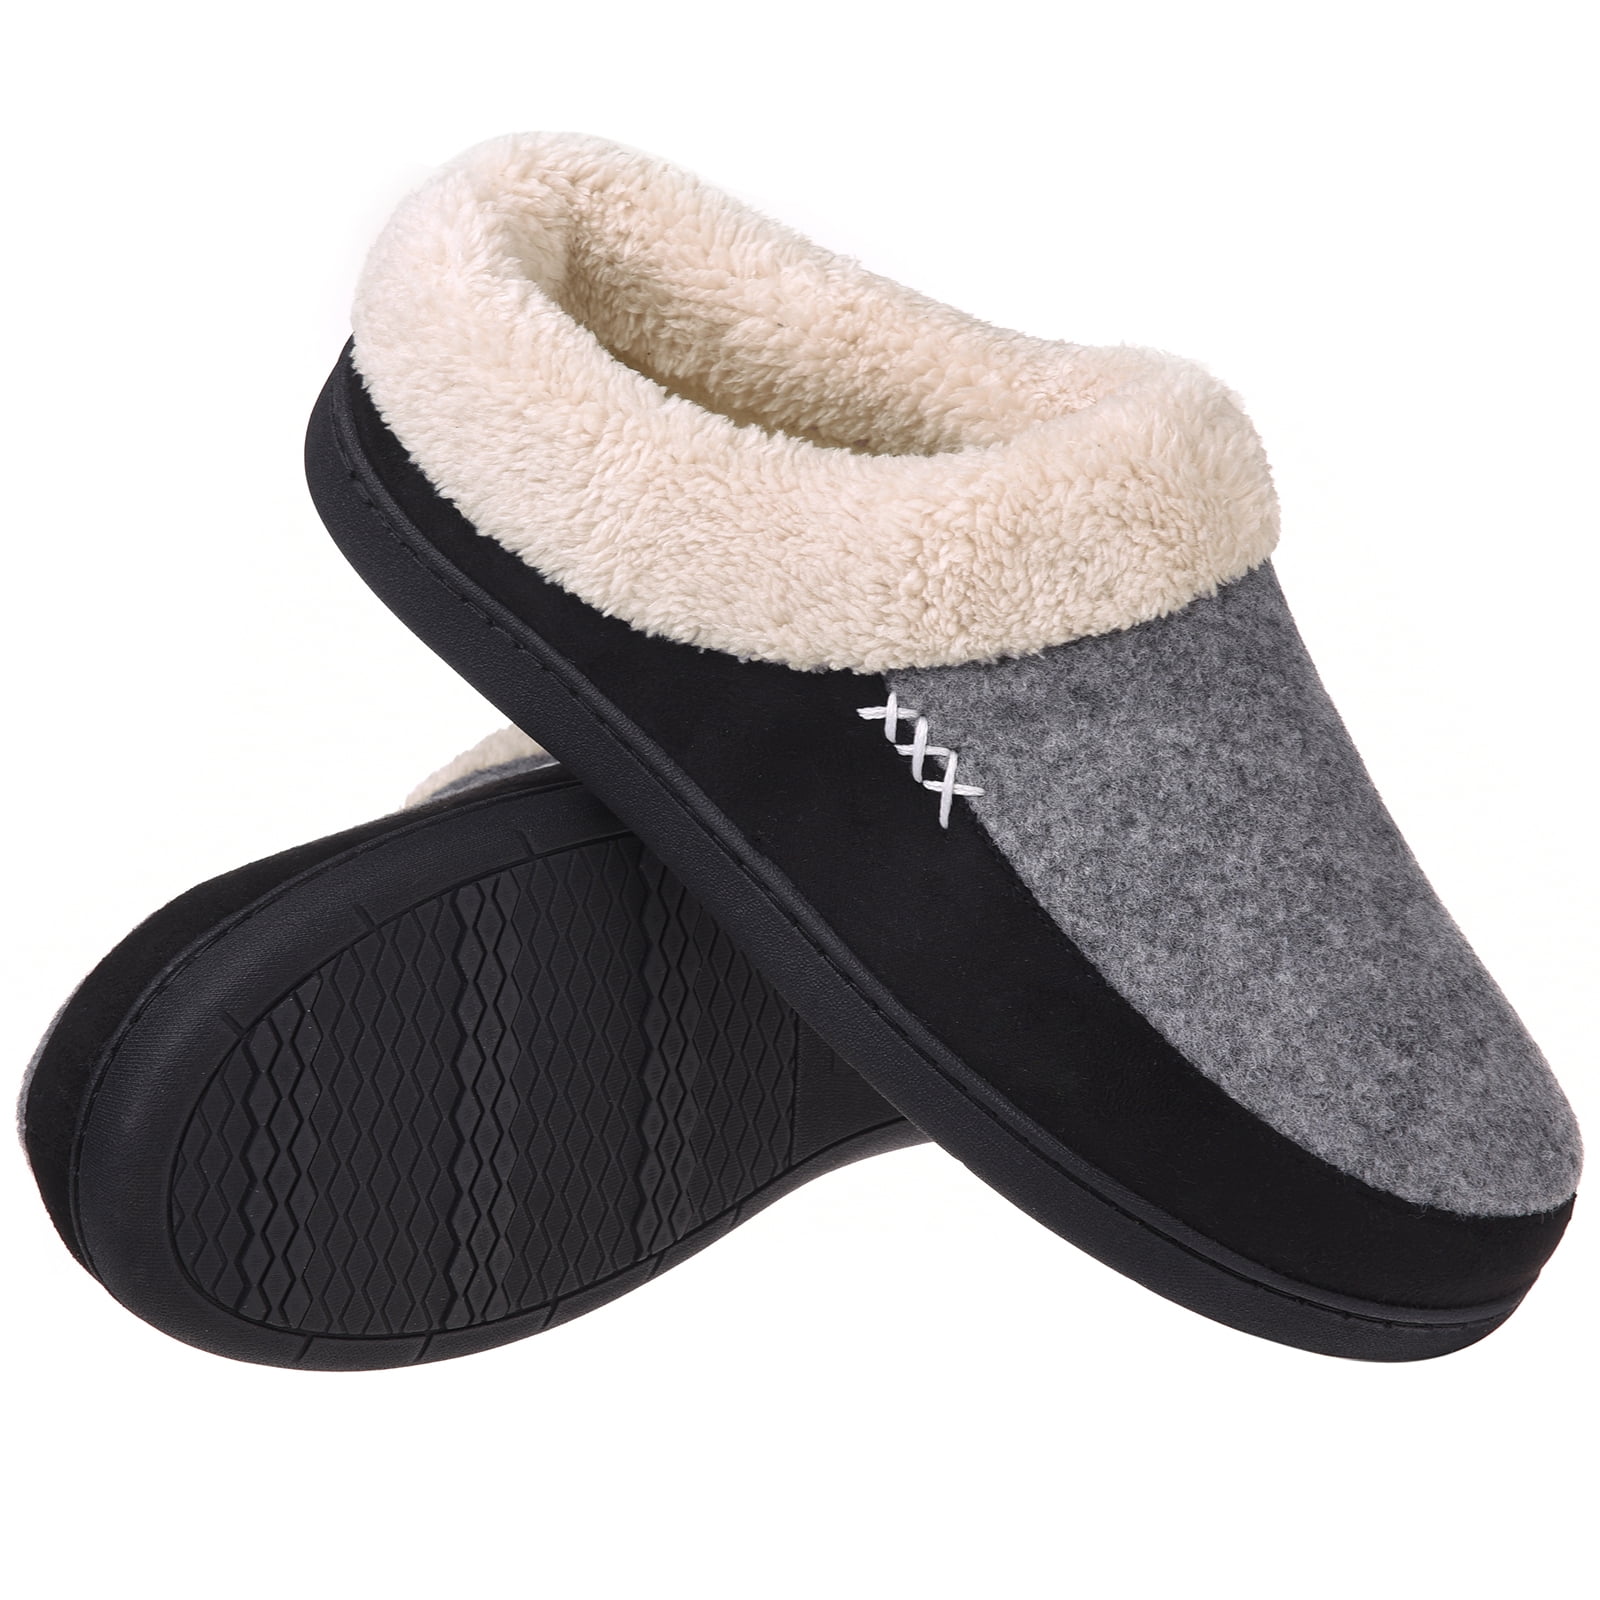 walmart mens slippers in store